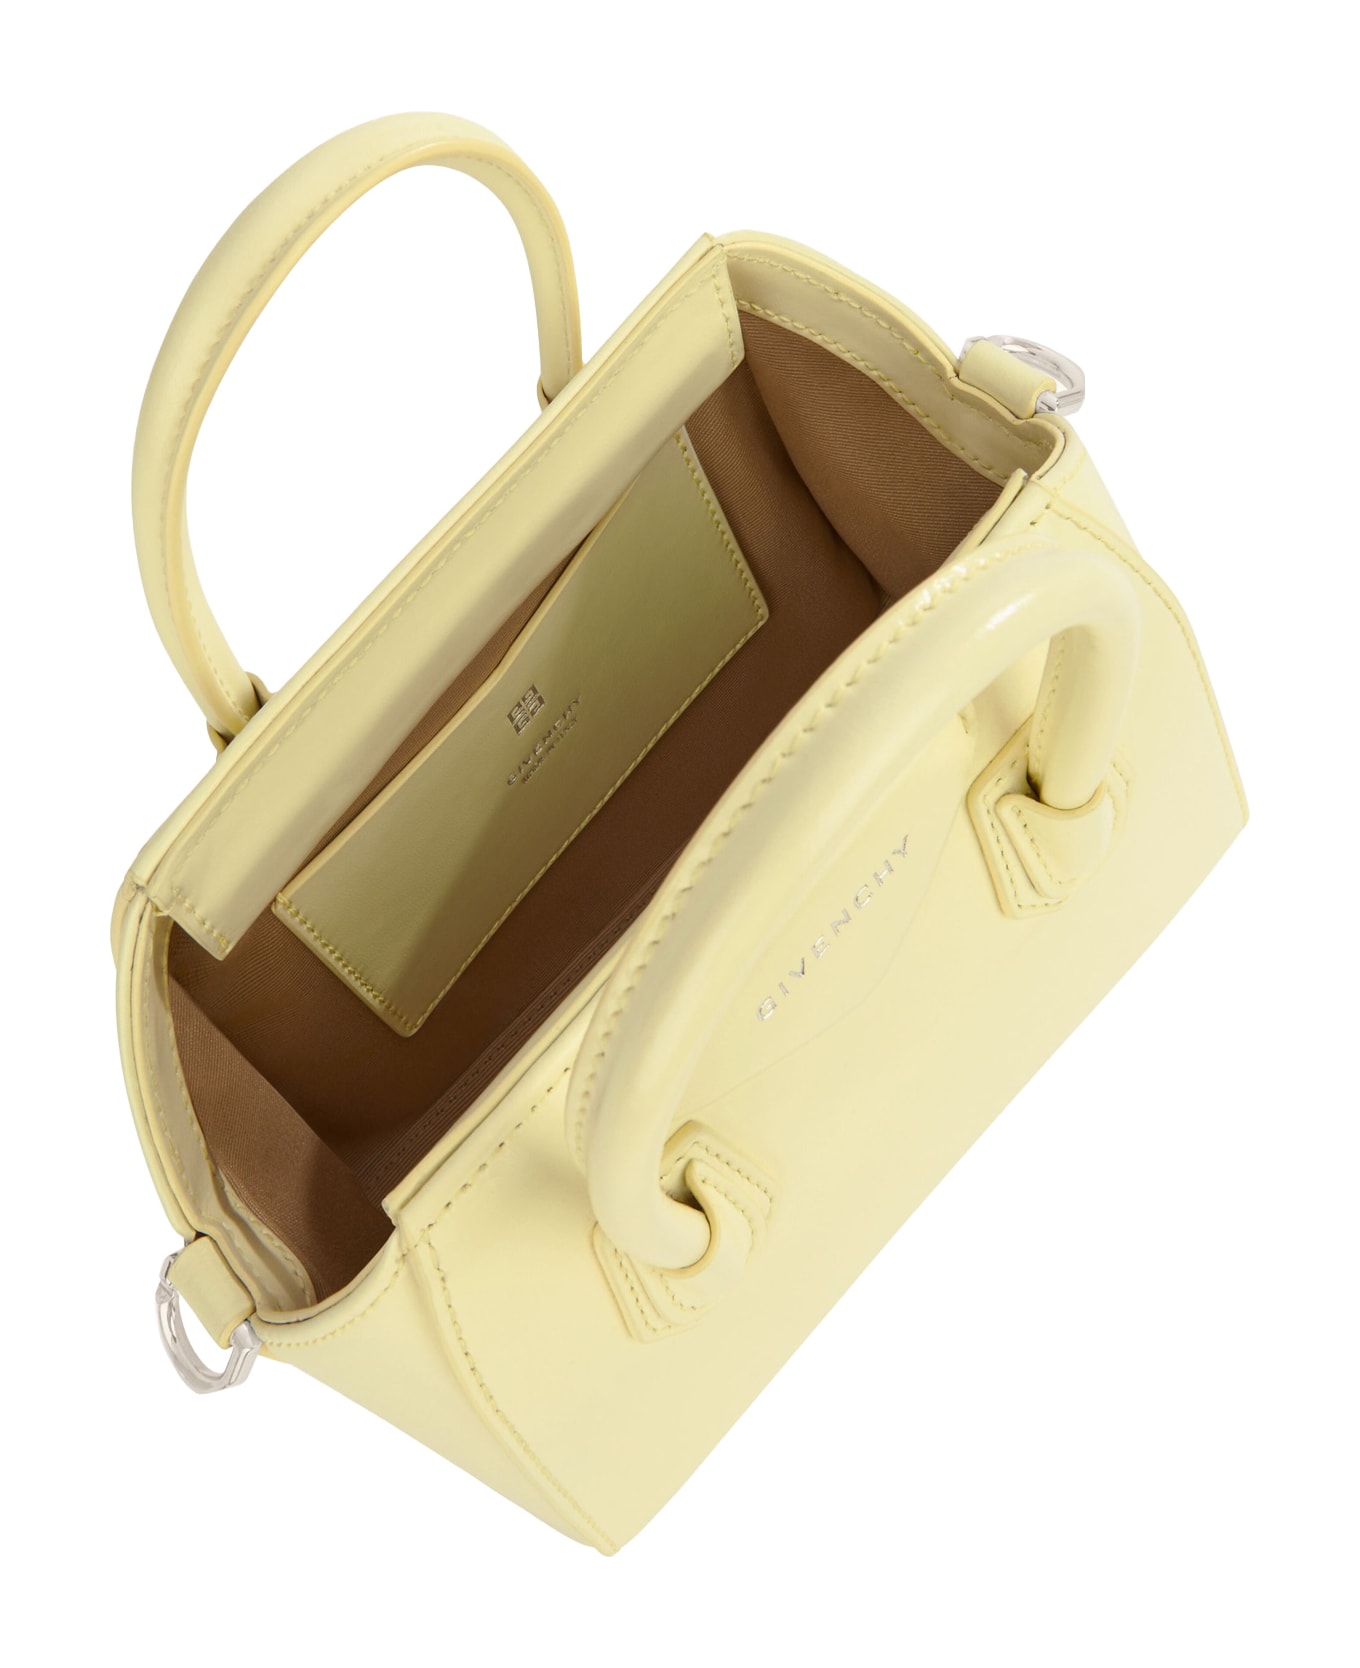 Givenchy Antigona Handbag - Yellow トートバッグ